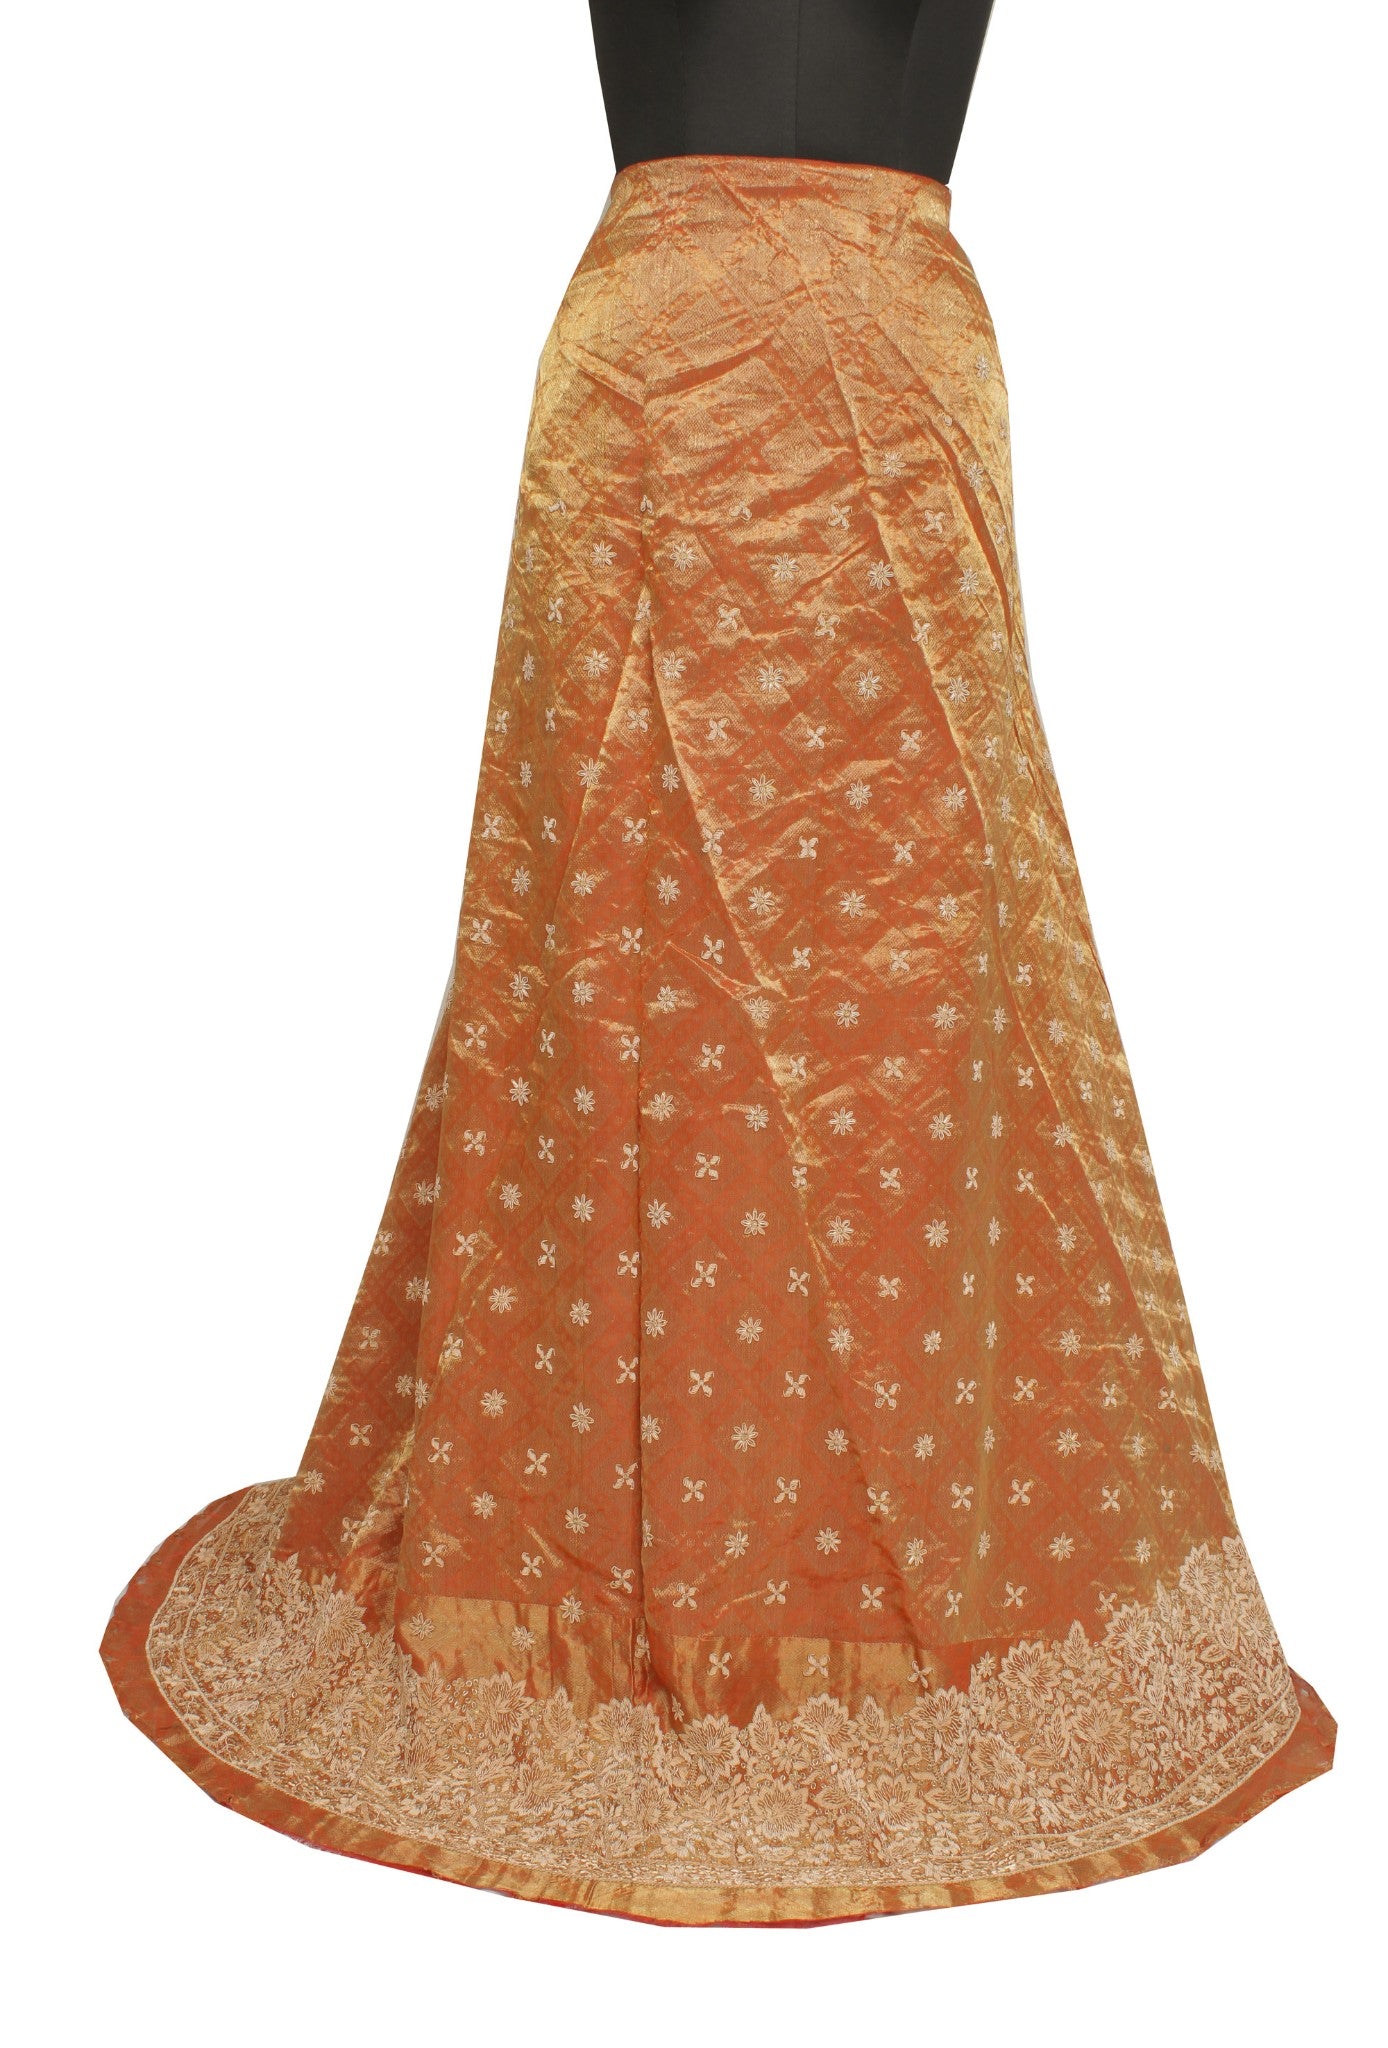 Sushila Vintage Rust Long Skirt Pure Tissue Silk Hand Beaded Unstitched Lehenga